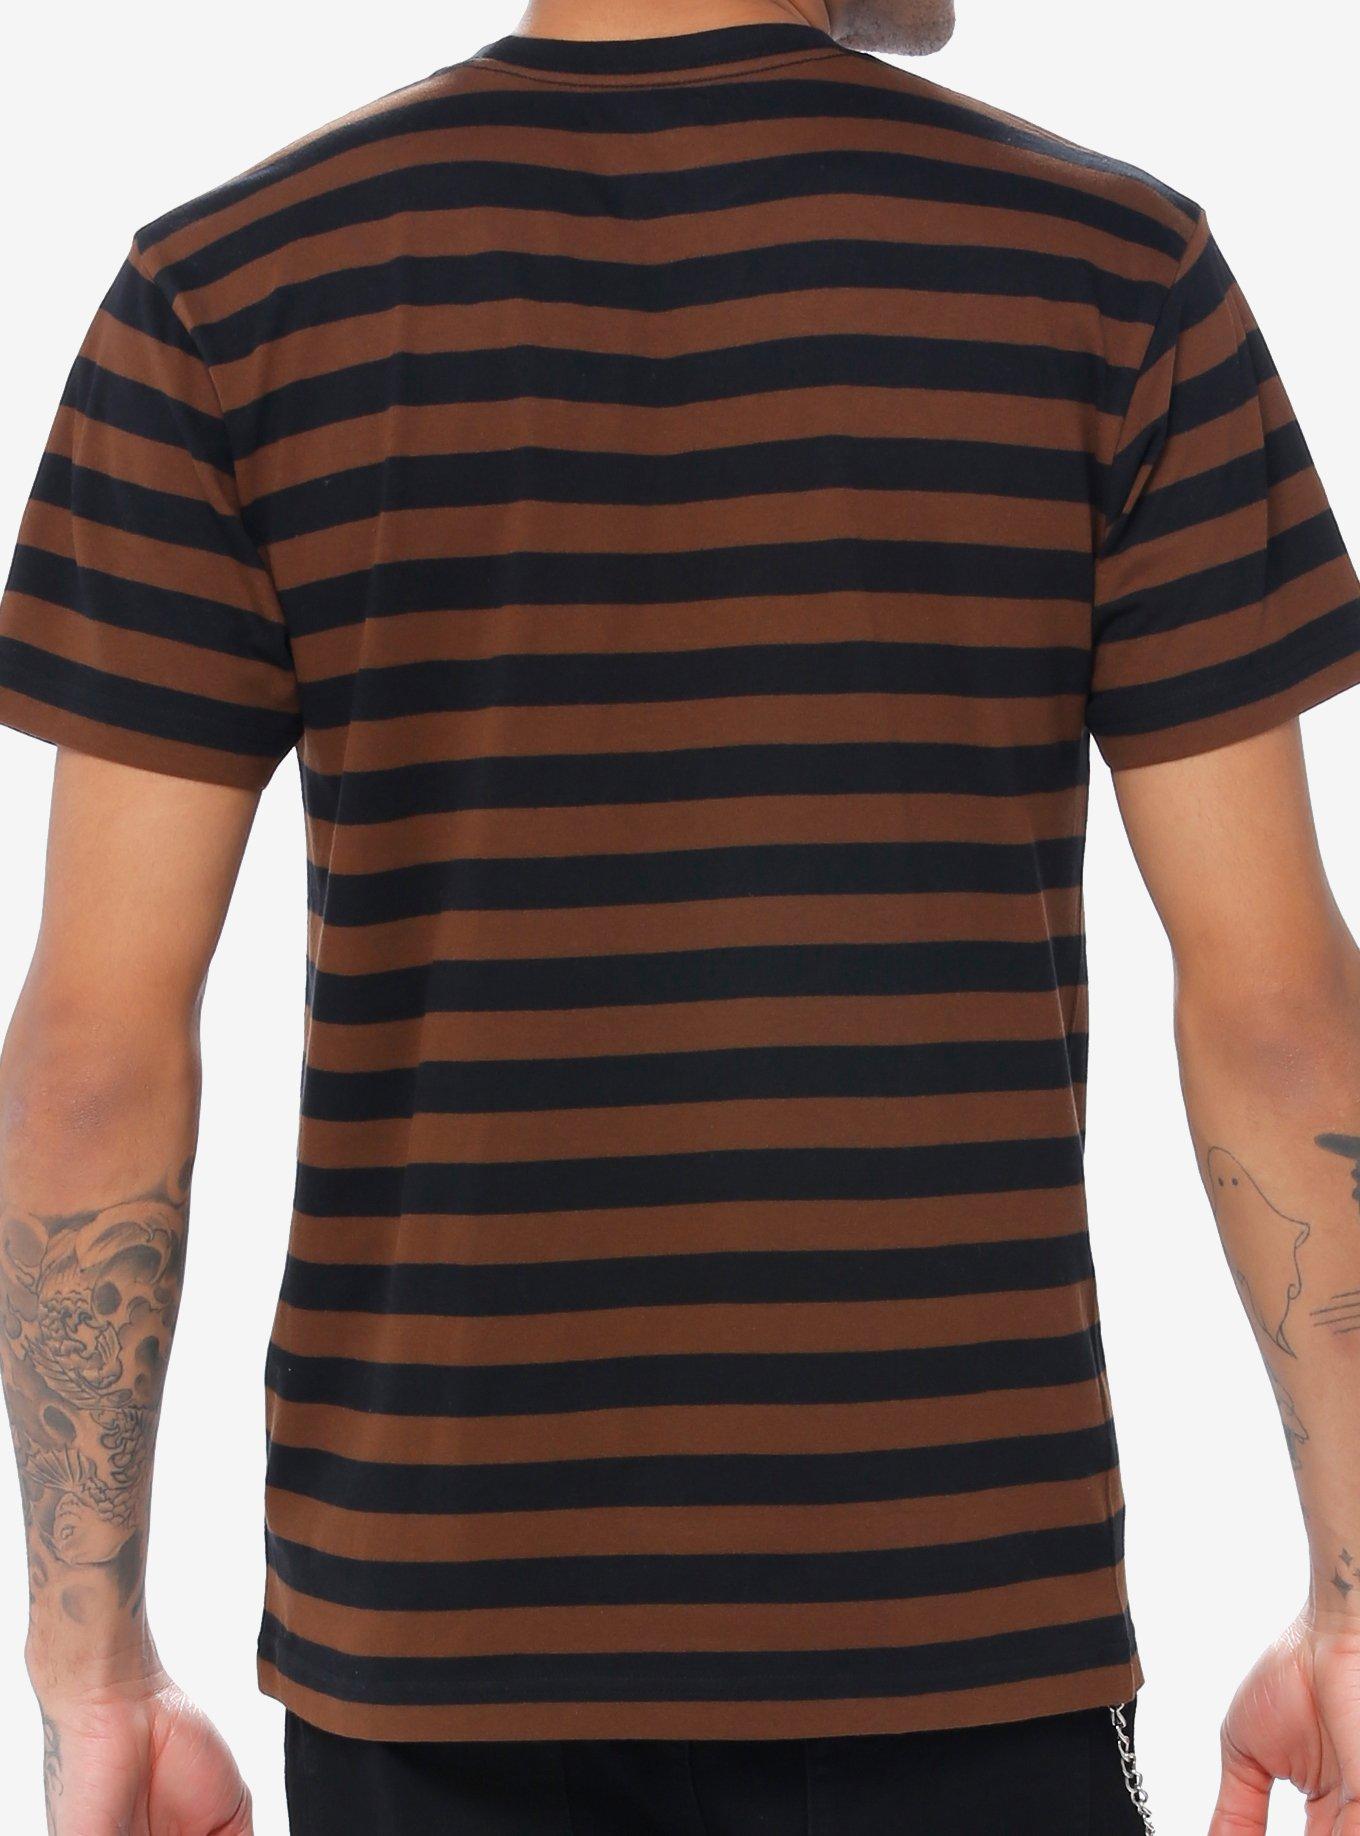 Black & Brown Stripe T-Shirt, BROWN, alternate